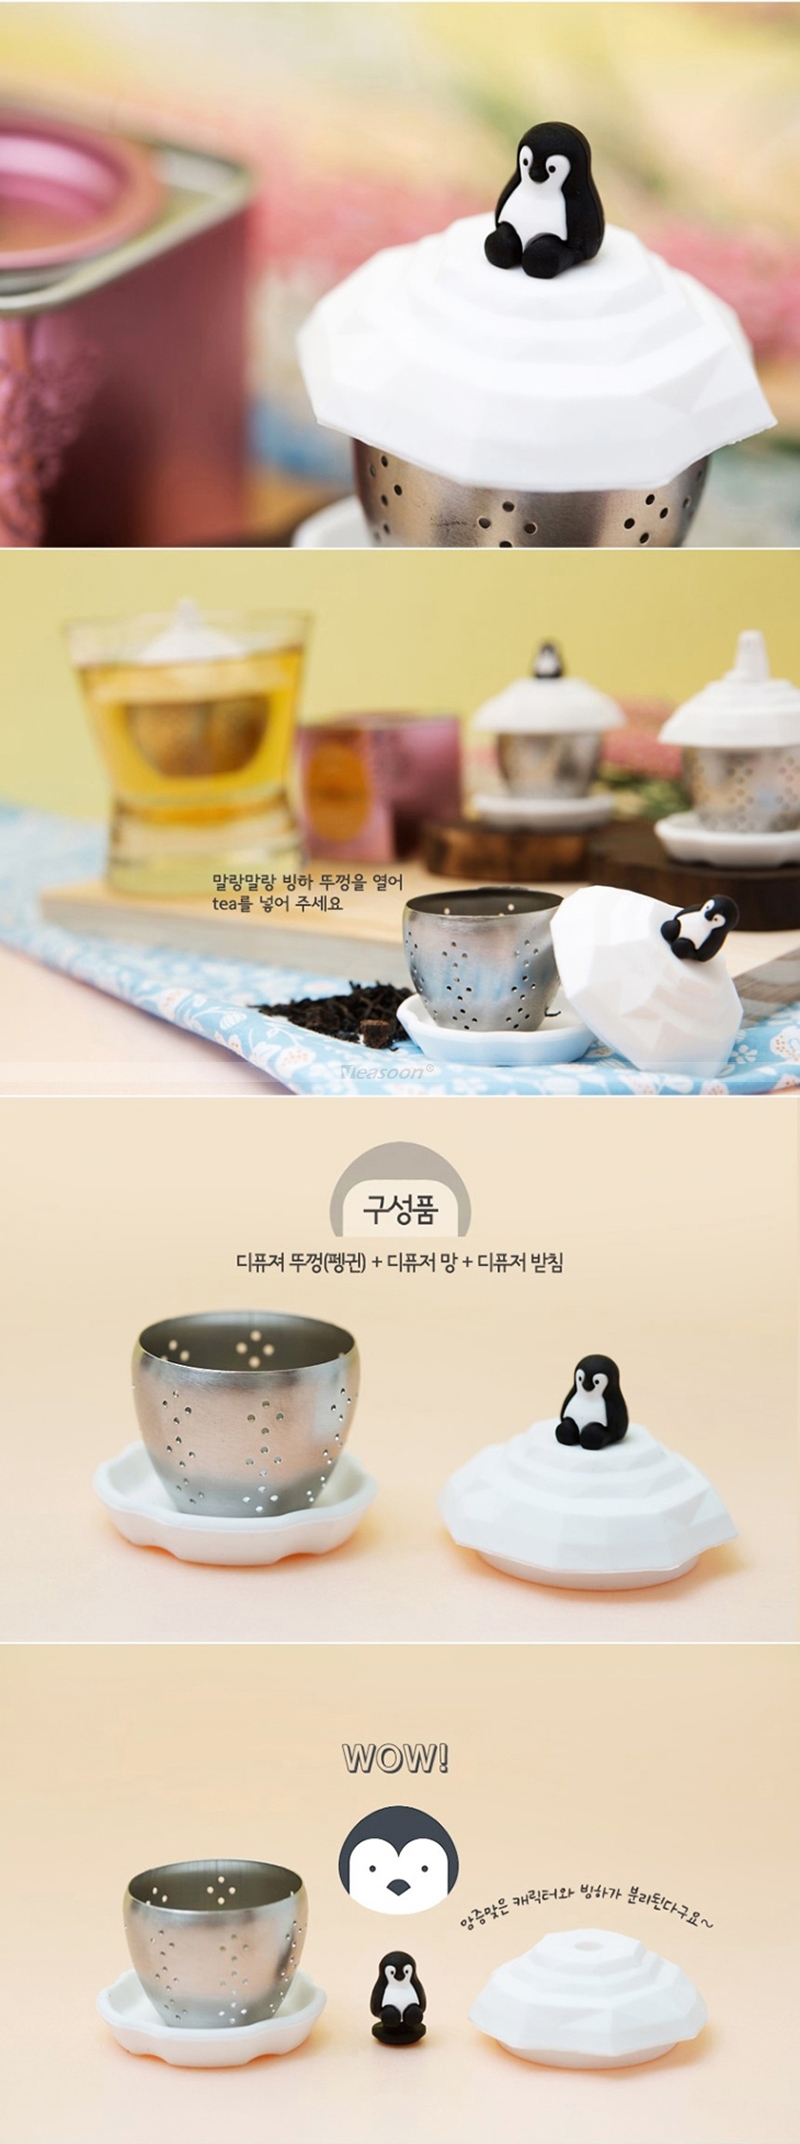 Penguin-Tea-Infuser-Gift-for-Grandfather-Te-Maker-企鵝泡茶器-펭귄티메이커-ペンギンティーメーカーTetera-de-pingüino